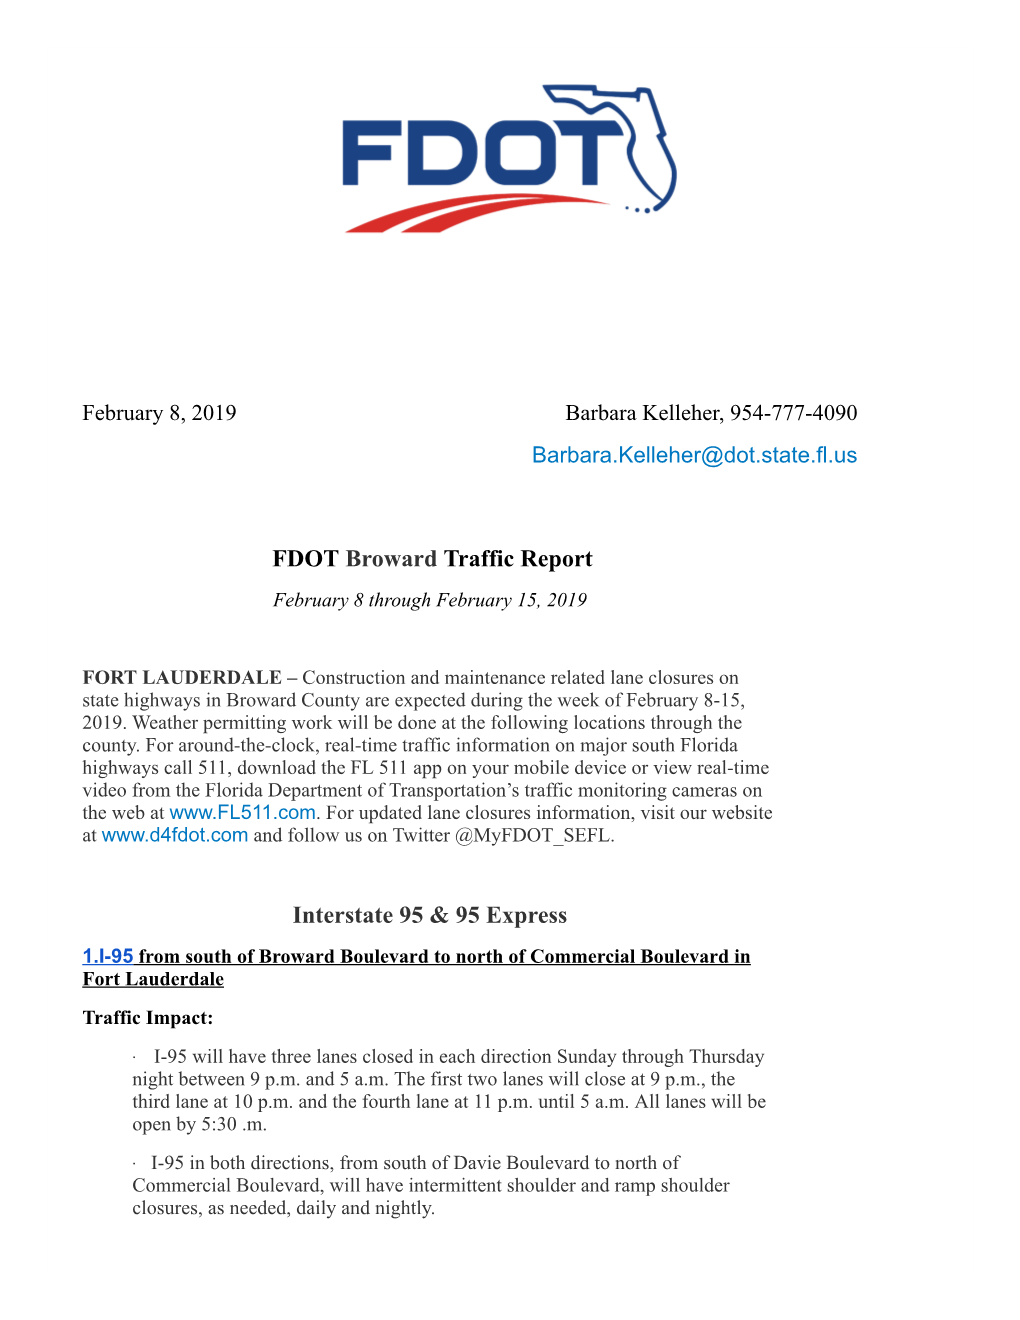 FDOT Broward Traffic Report Interstate 95 & 95 Express